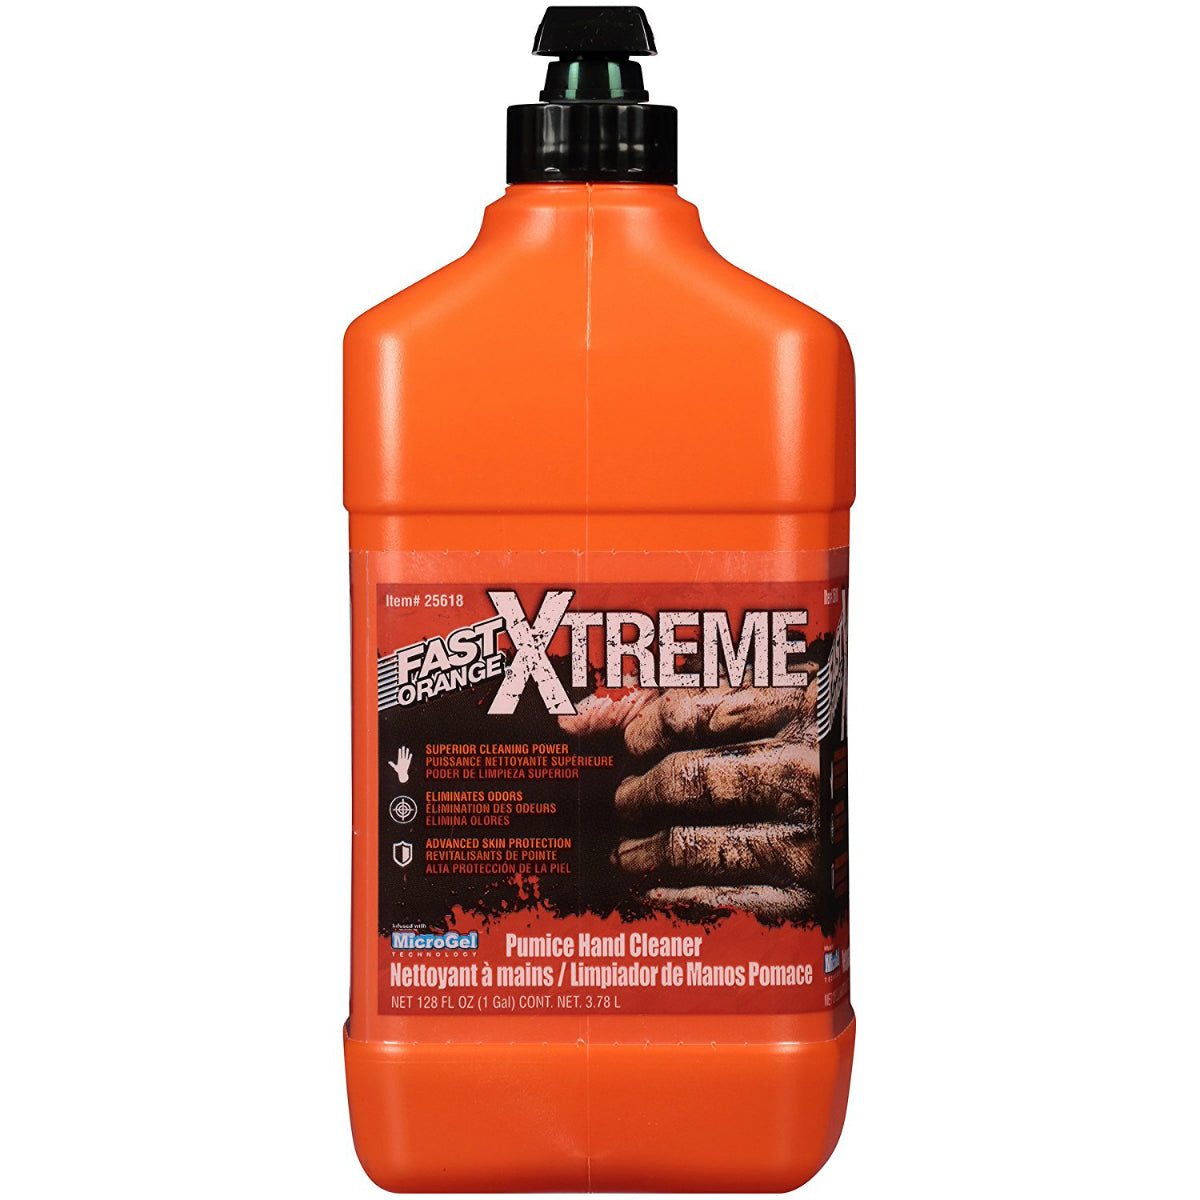 Fast Orange® 25618 Xtreme Professional Grade Hand Cleaner w/ Pump, 1-Gallon